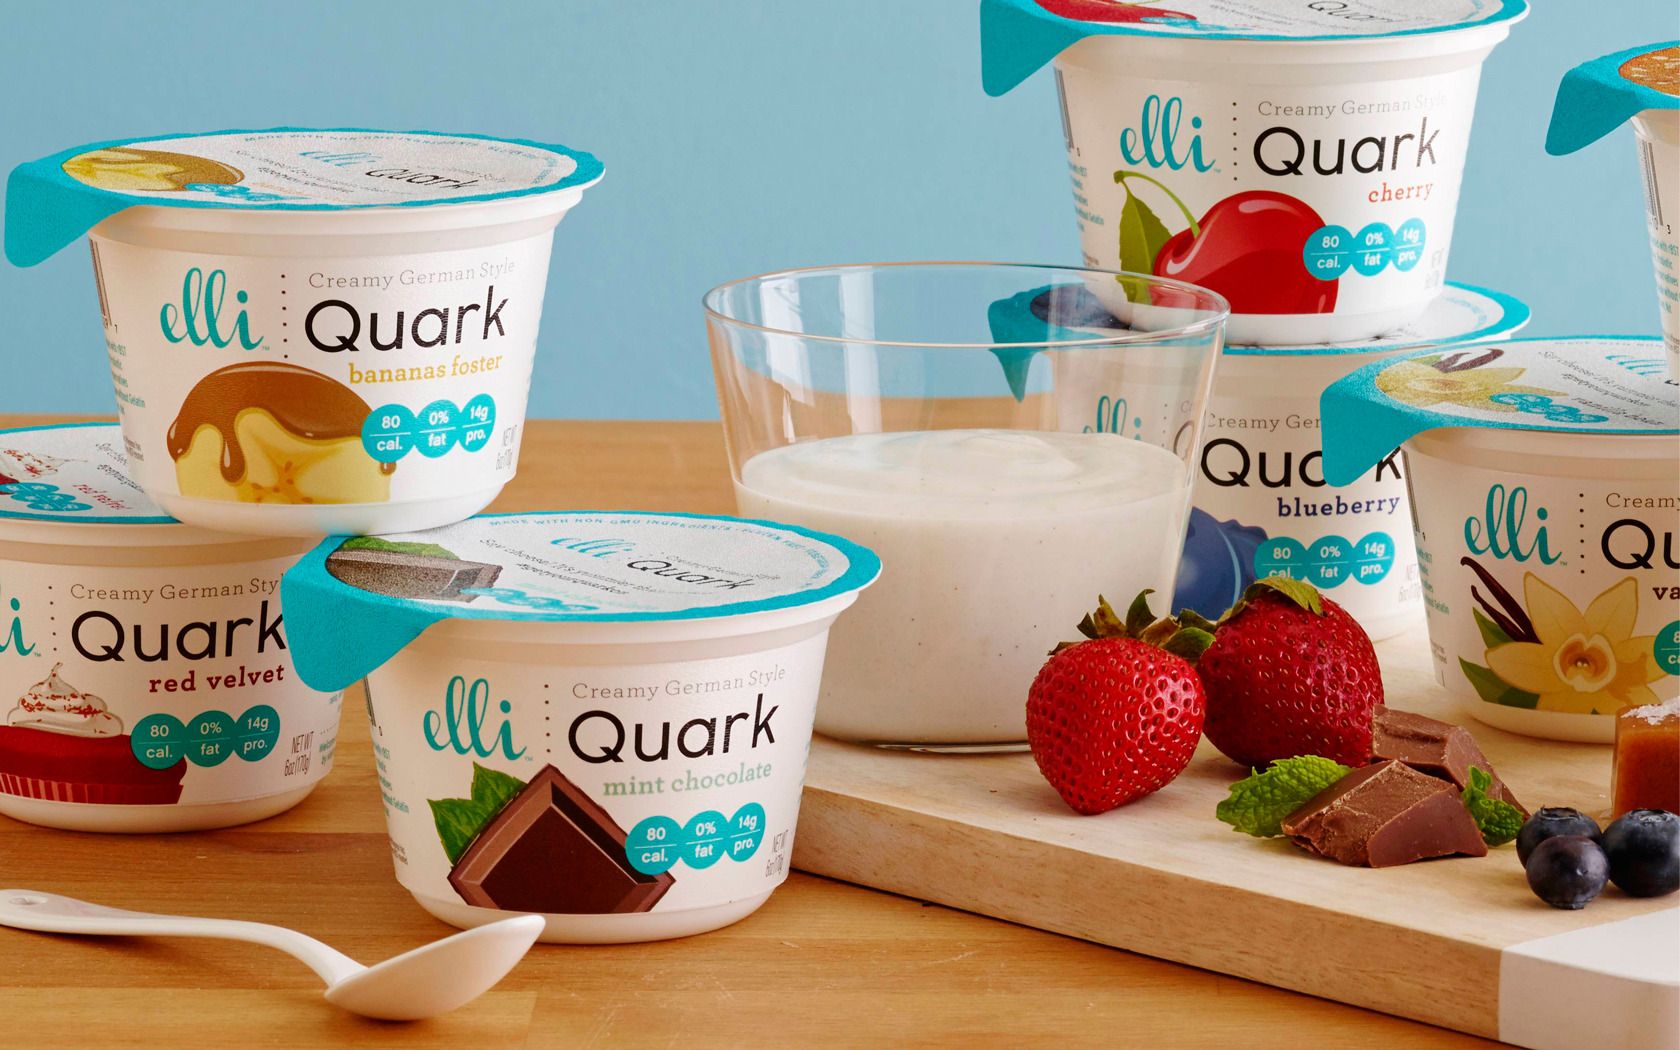 Germal style Elli Quark: Rick like Greek yogurt, with more protein and no added sugar